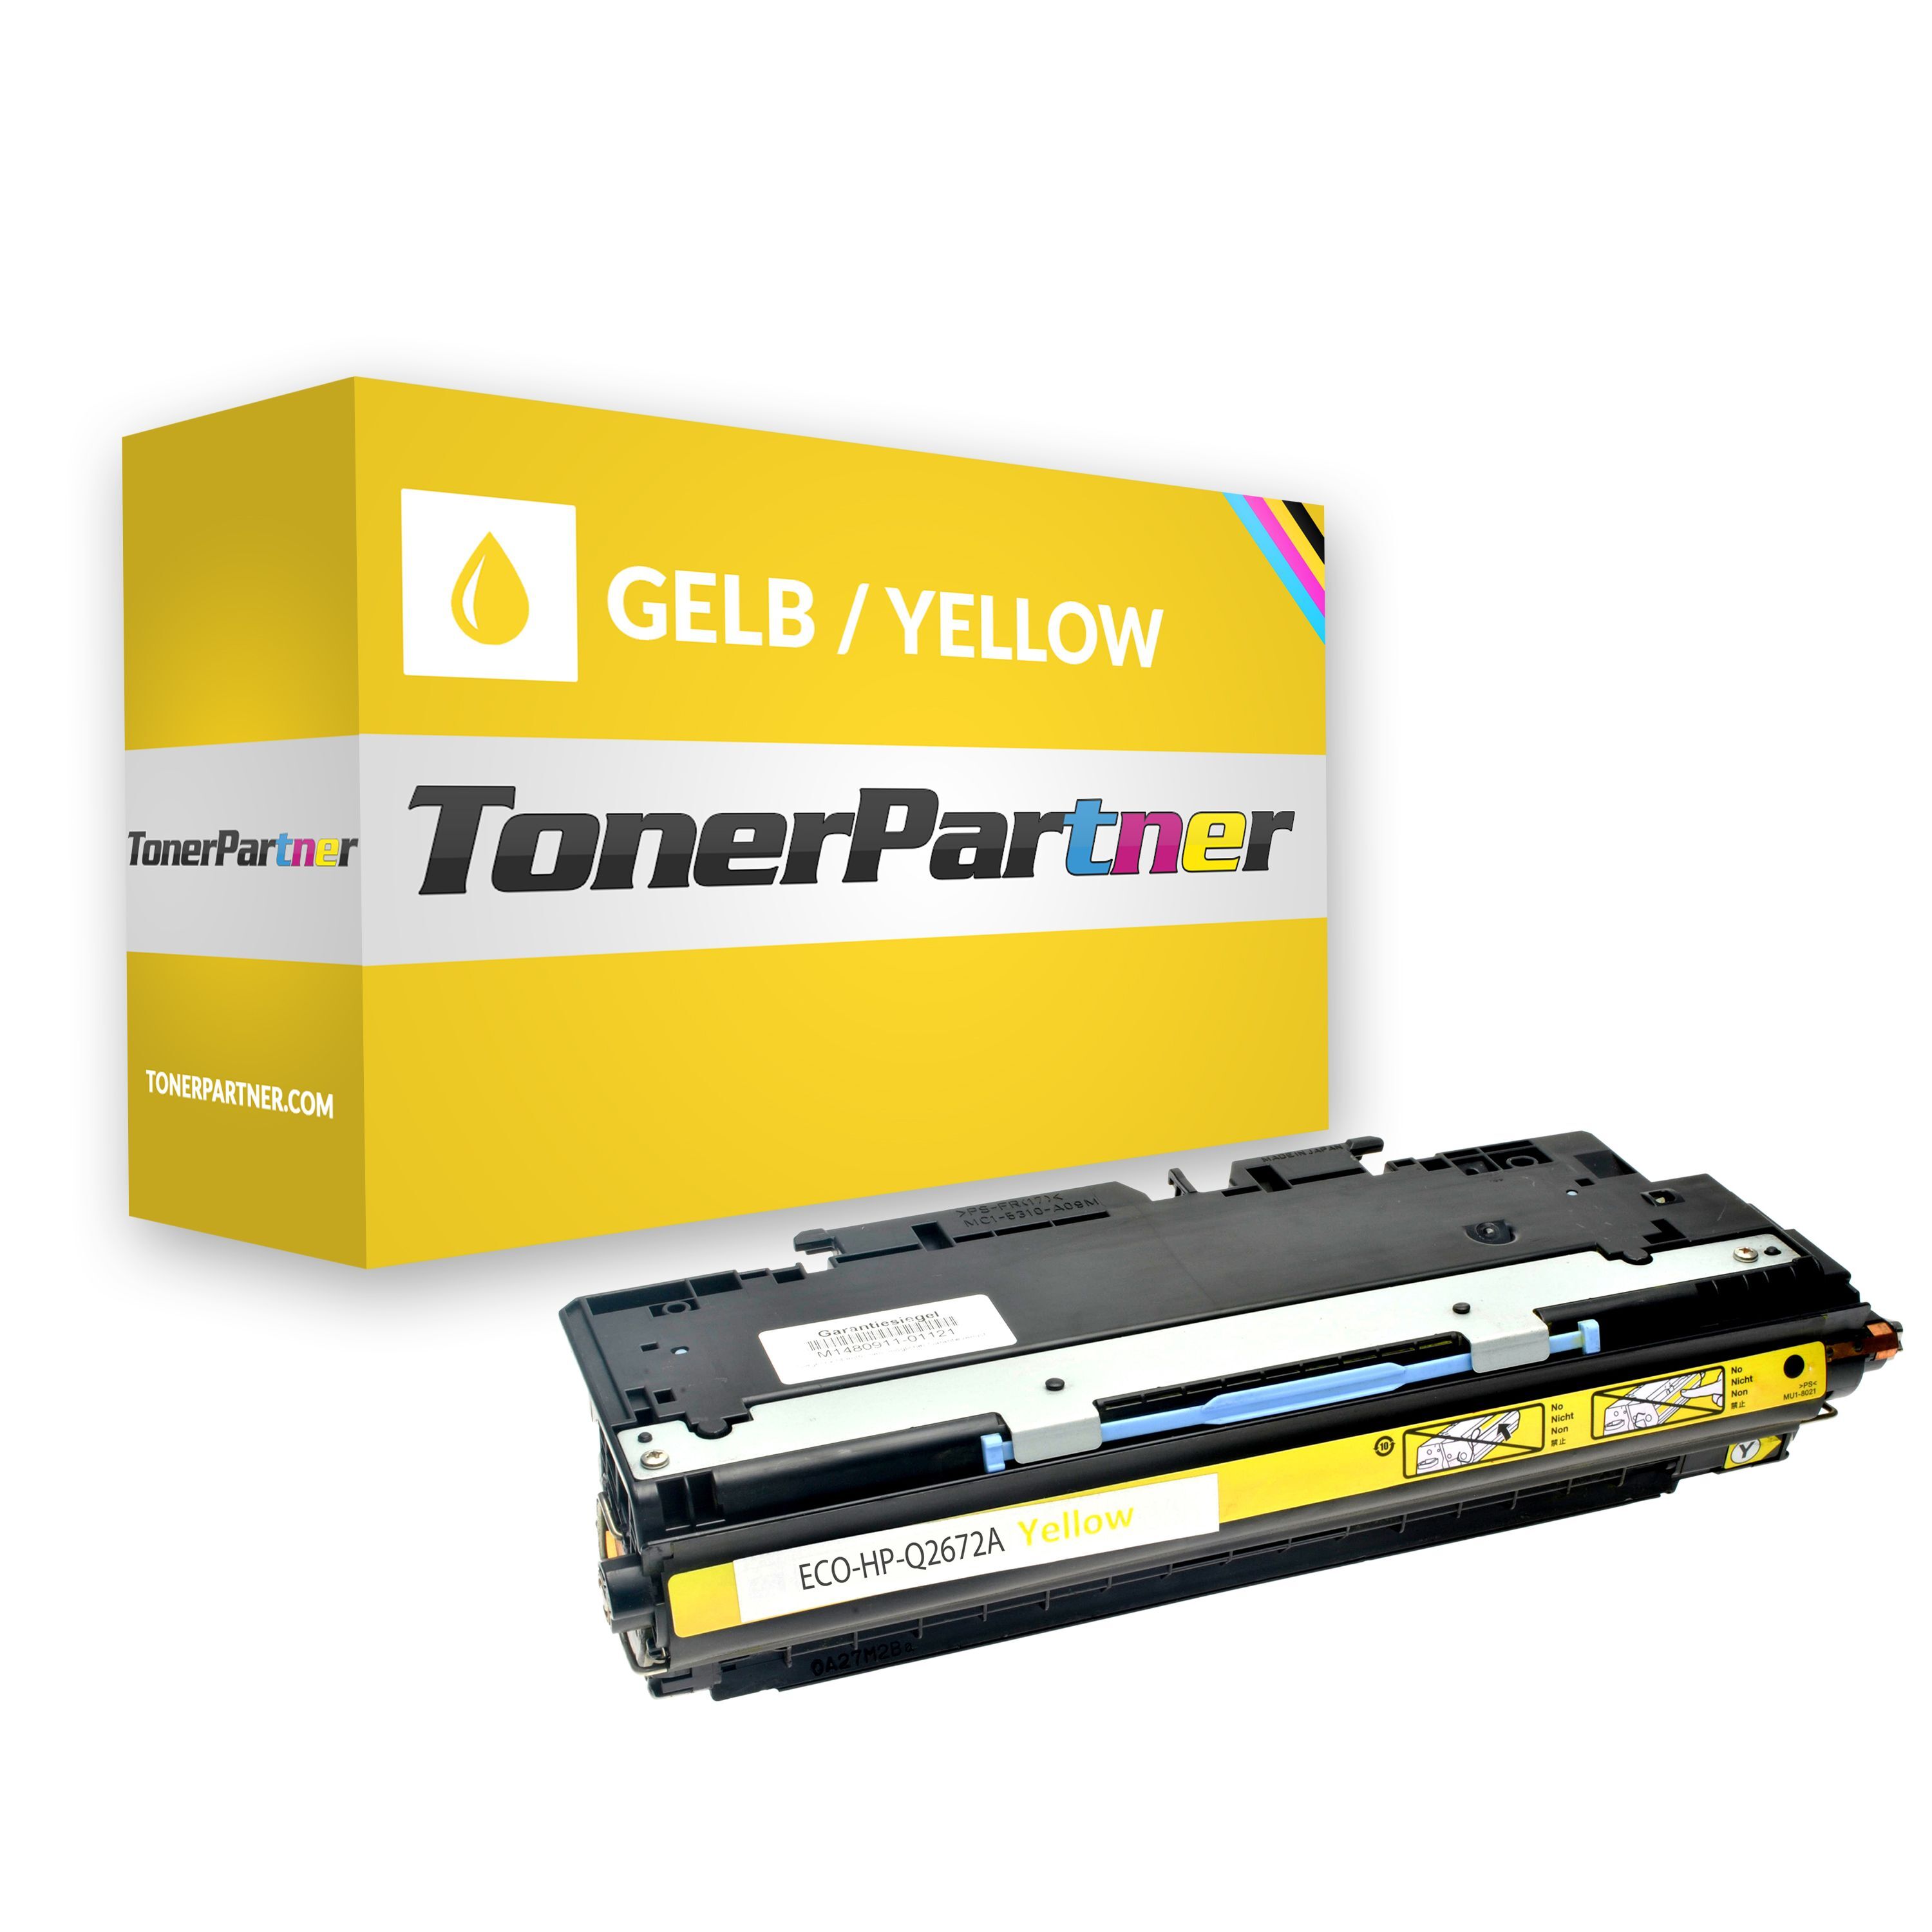 TonerPartner Kompatibel zu HP Color LaserJet 3550 N Toner (309A / Q 2672 A) gelb, 4.000 Seiten, 1,07 Rp pro Seite von TonerPartner